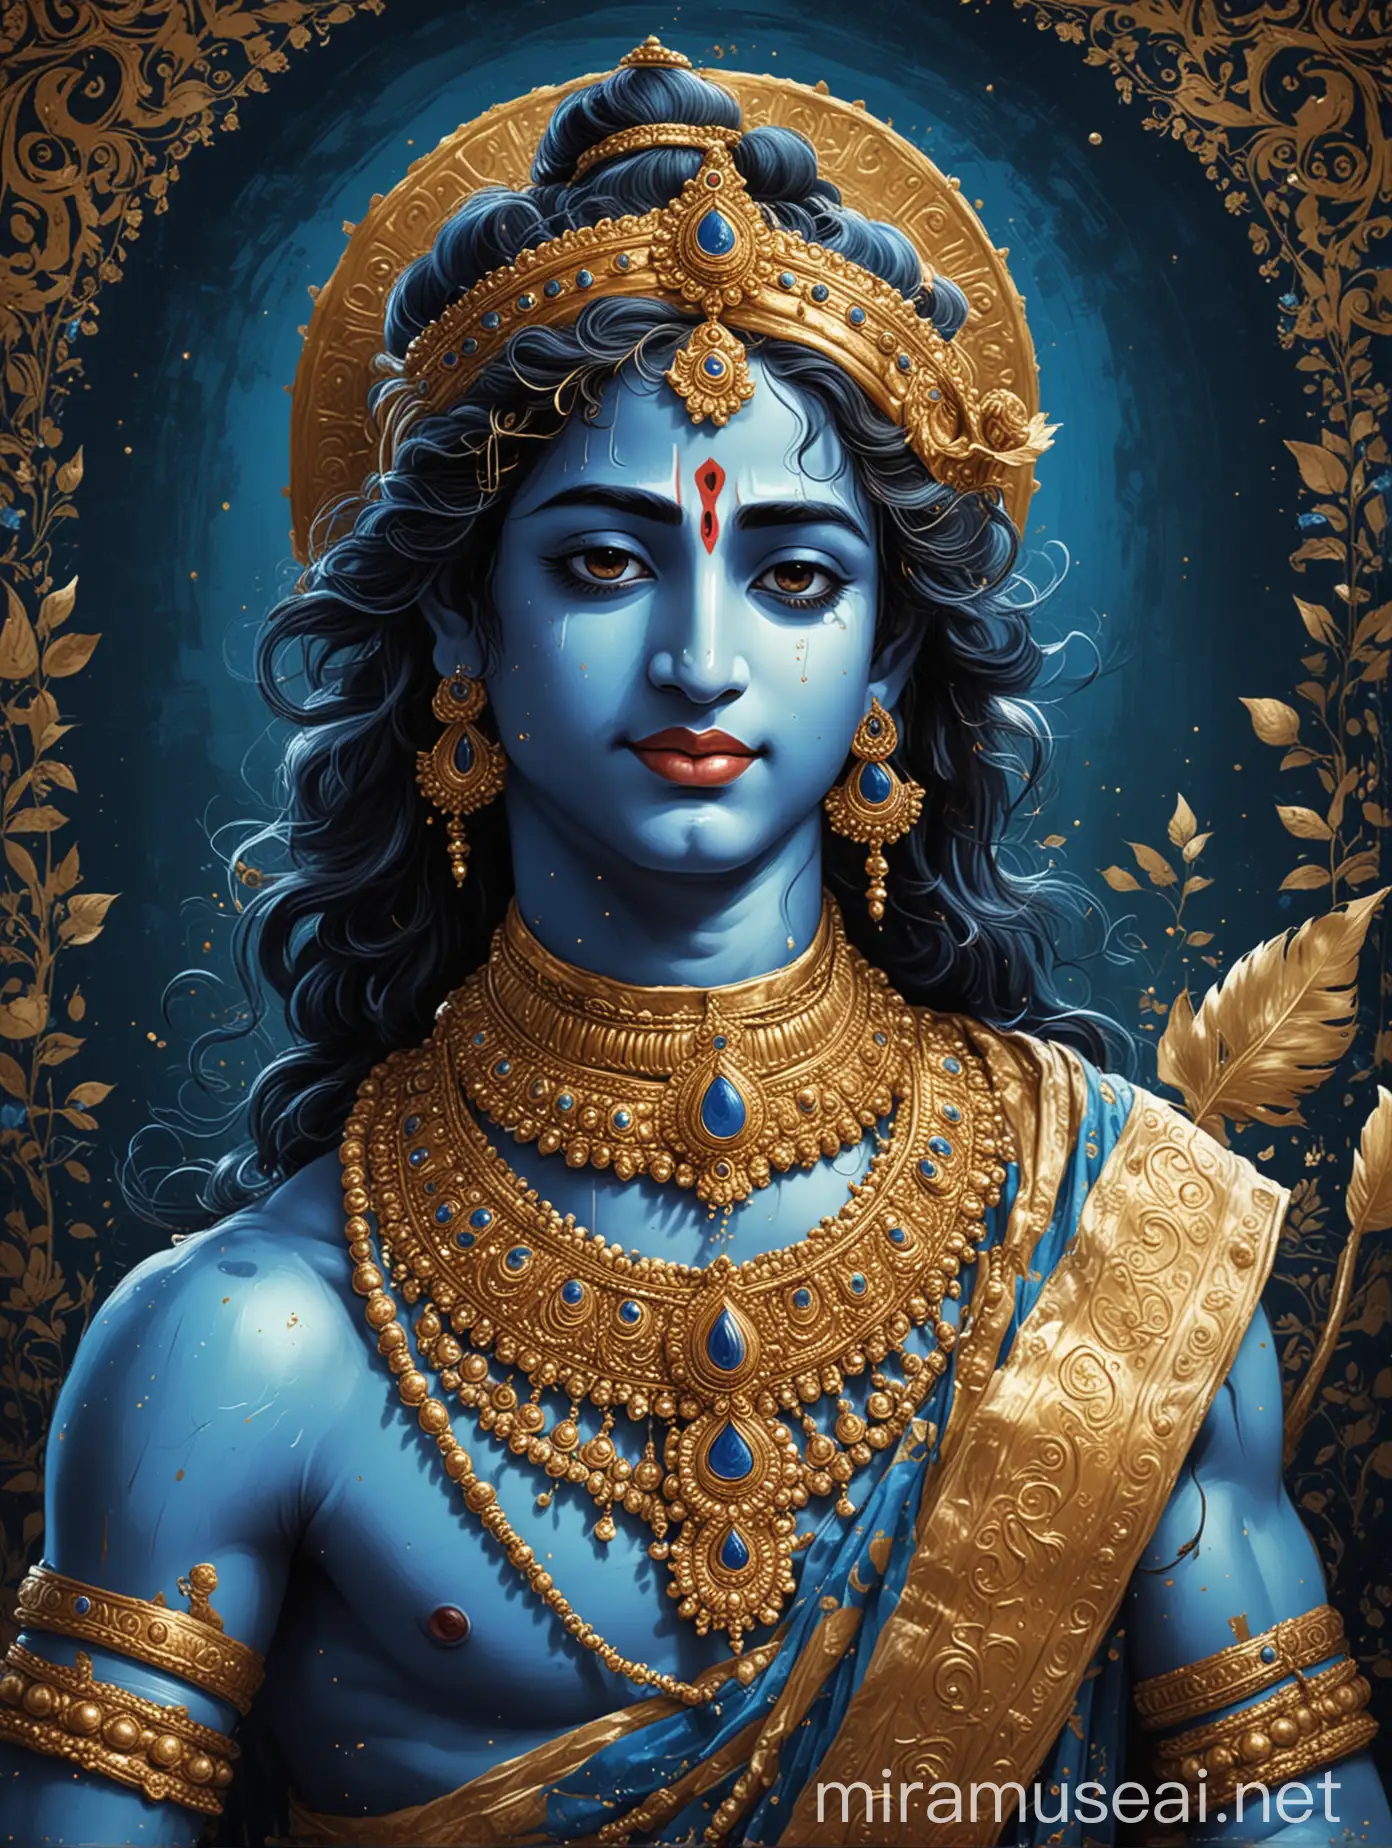 Divine Lord Krishna Serene Digital Illustration in Blue and Gold